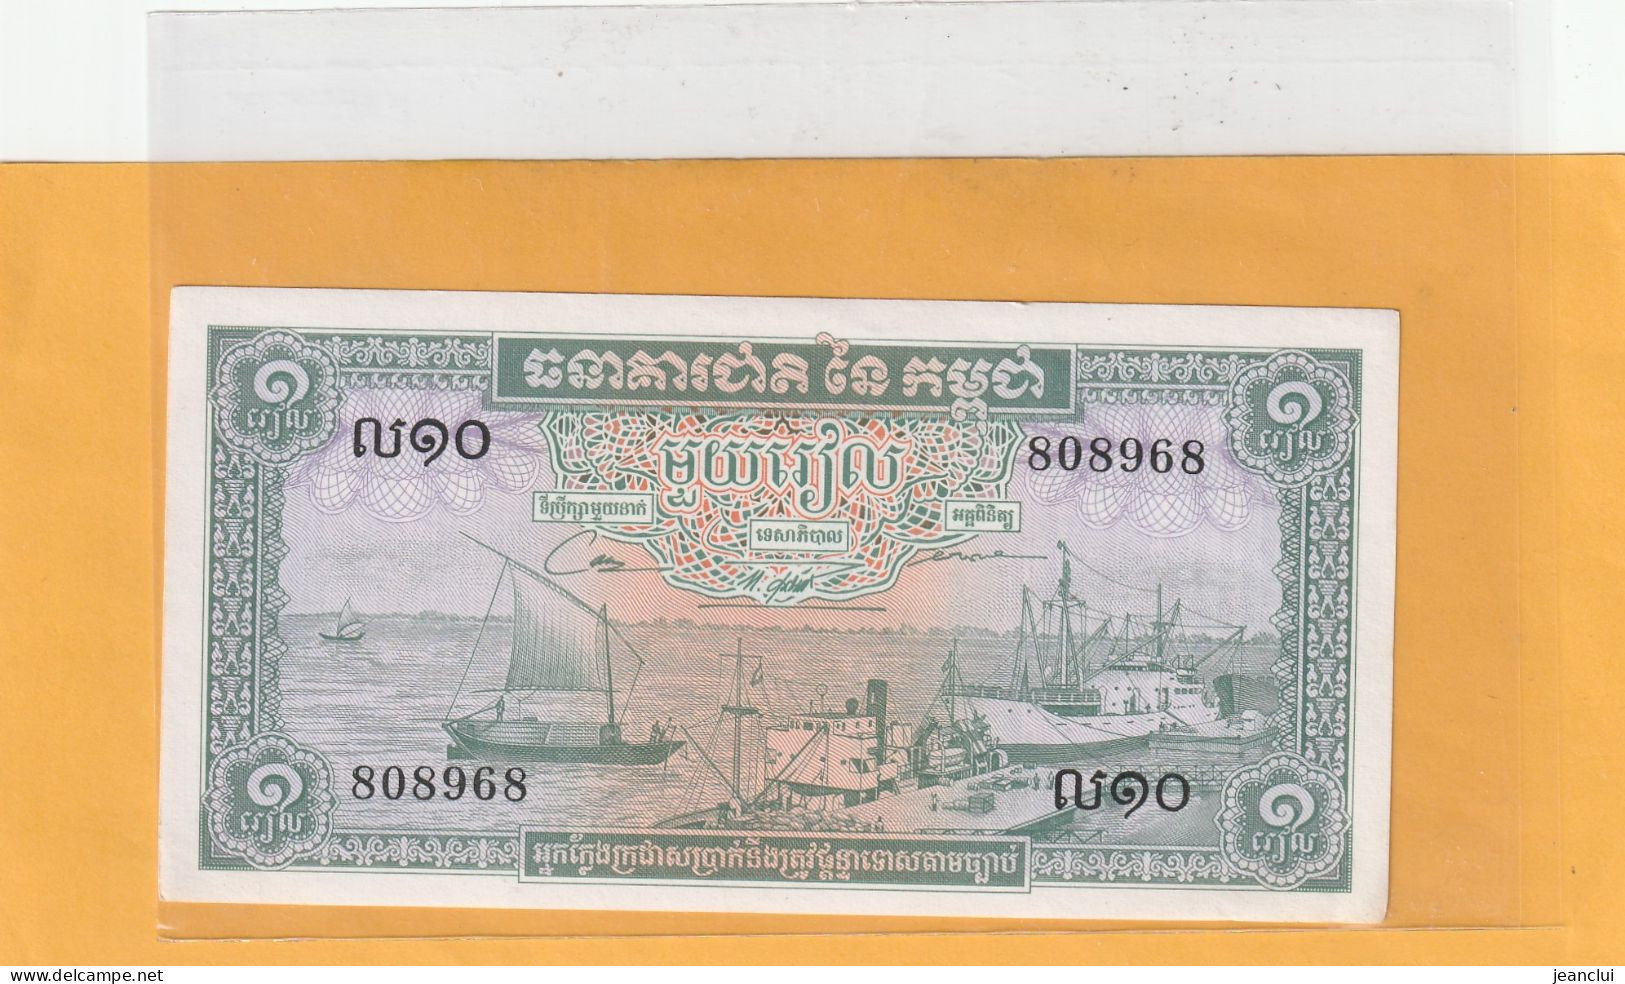 BANQUE NATIONALE DU CAMBODGE -  1 RIEL  .  NON DATE    . N°  808968 .  2 SCANNES  .  ETAT LUXE - Cambodge